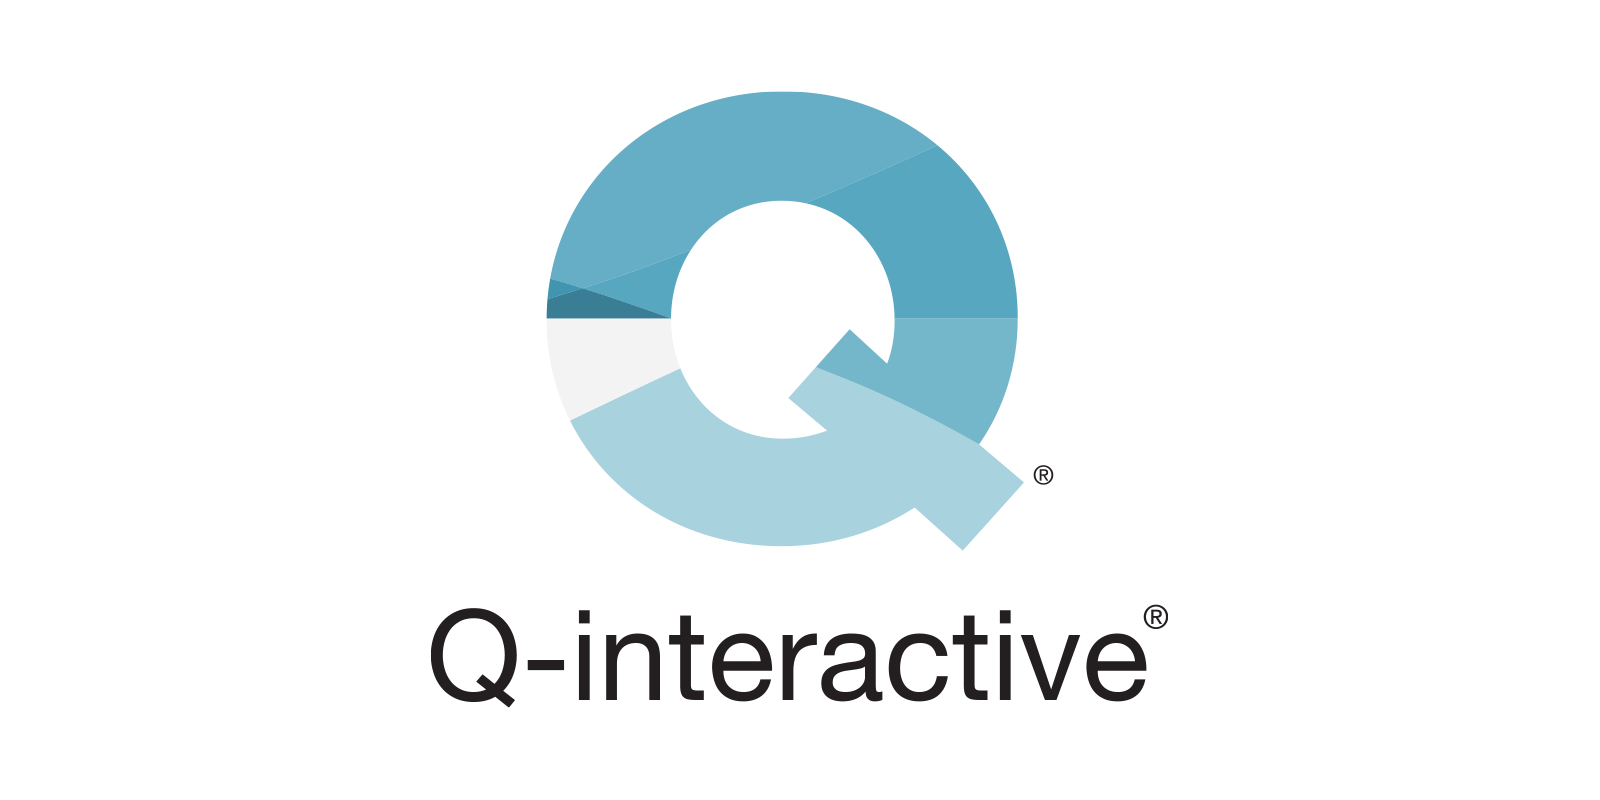 Q-interactive logo